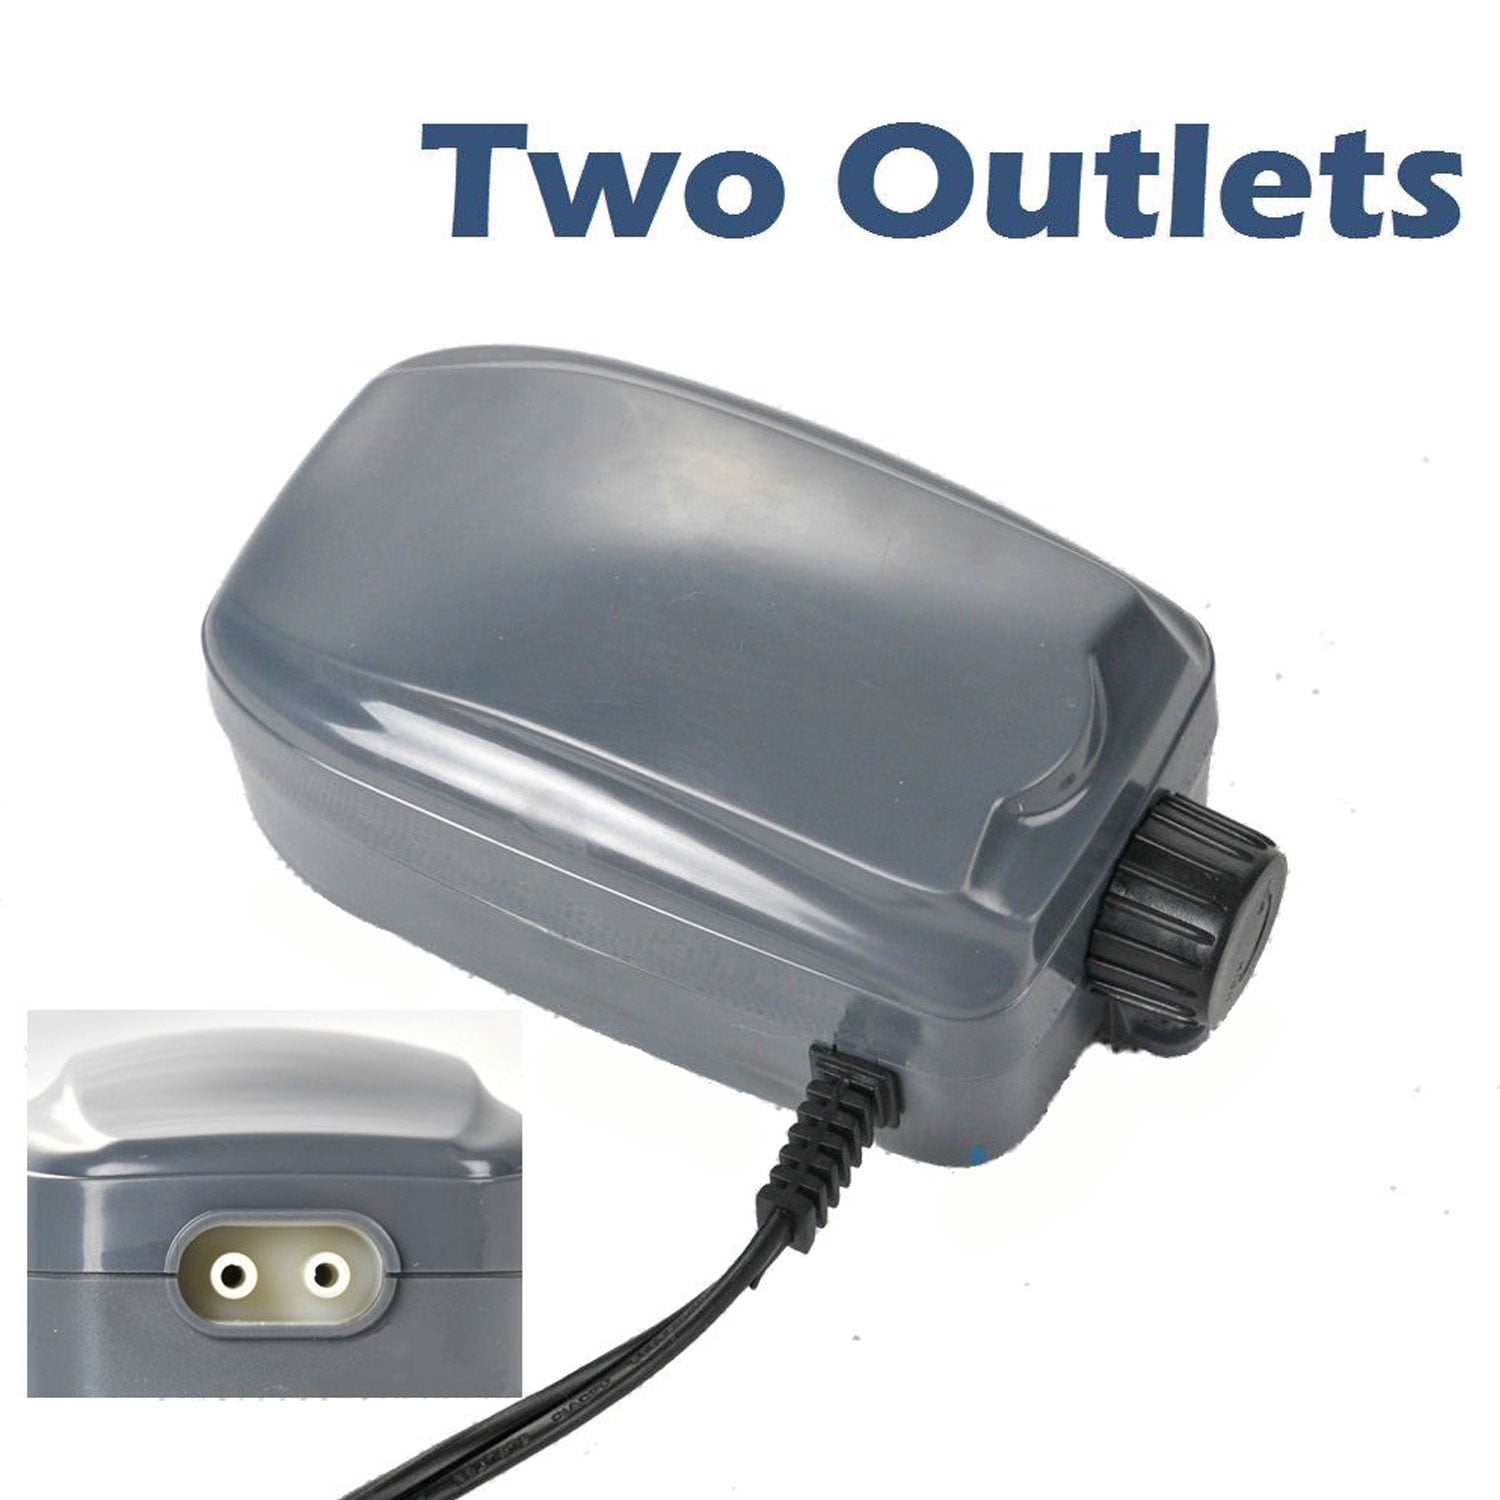 2pc Air Pump Two Outlets Adjustable Upto 120 Gallon Aquarium & 2 Free 16' Tubing 